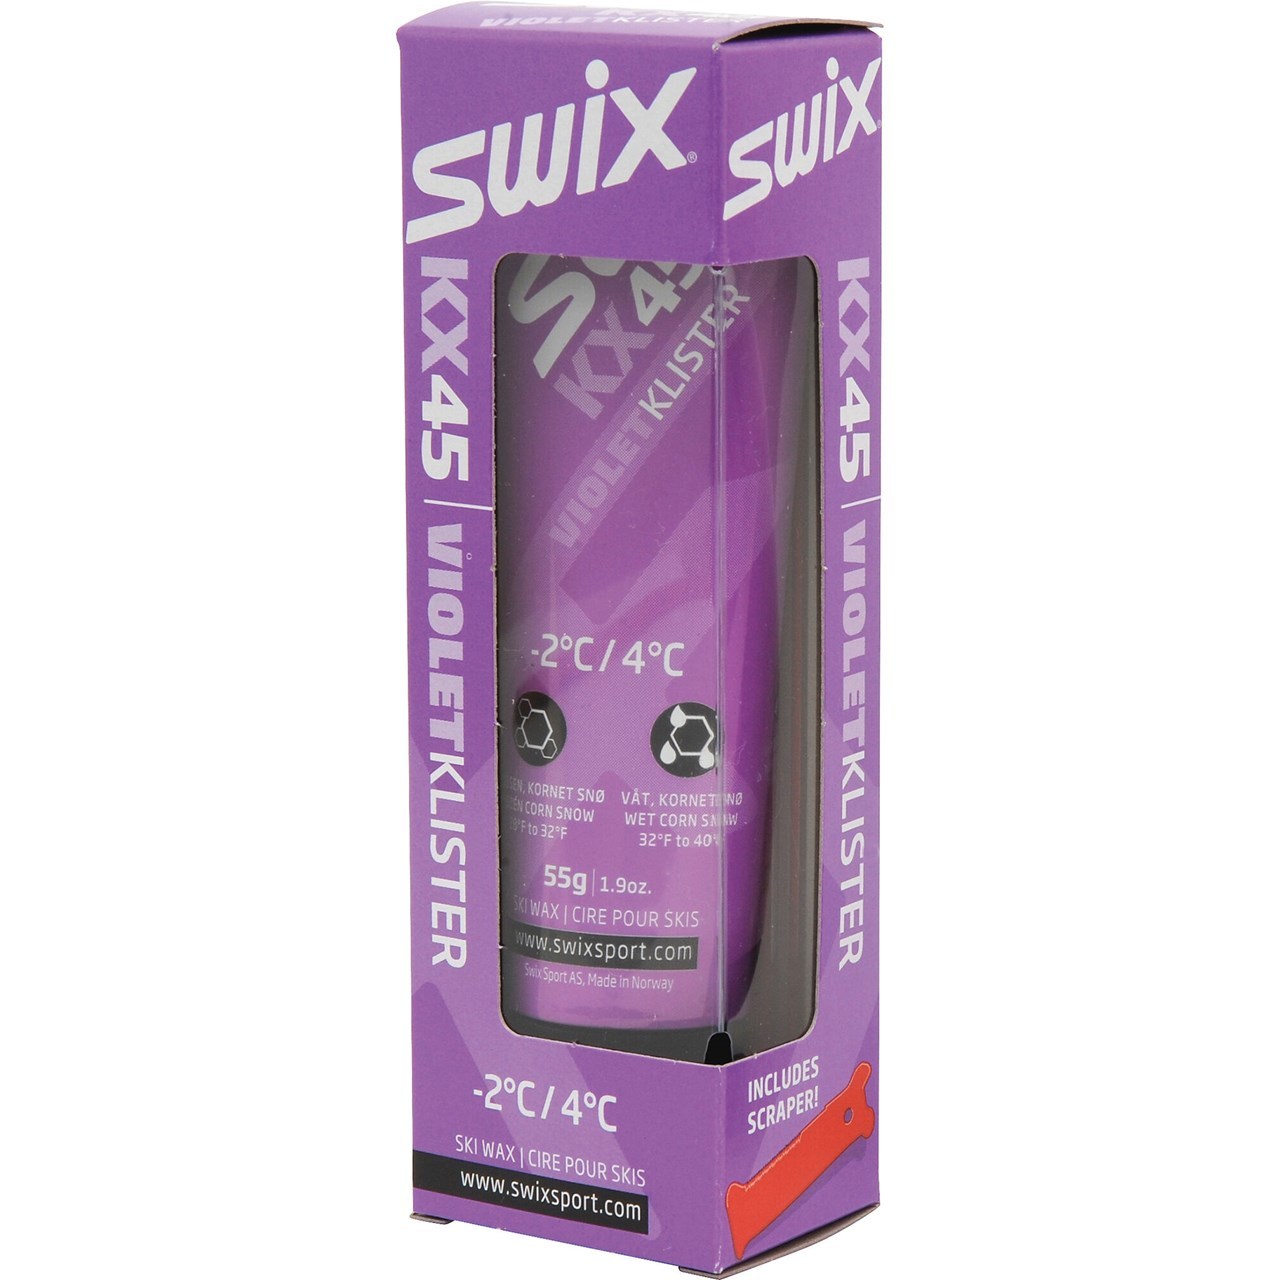 Swix KX45 Violet Klister 55g -2/+4°C